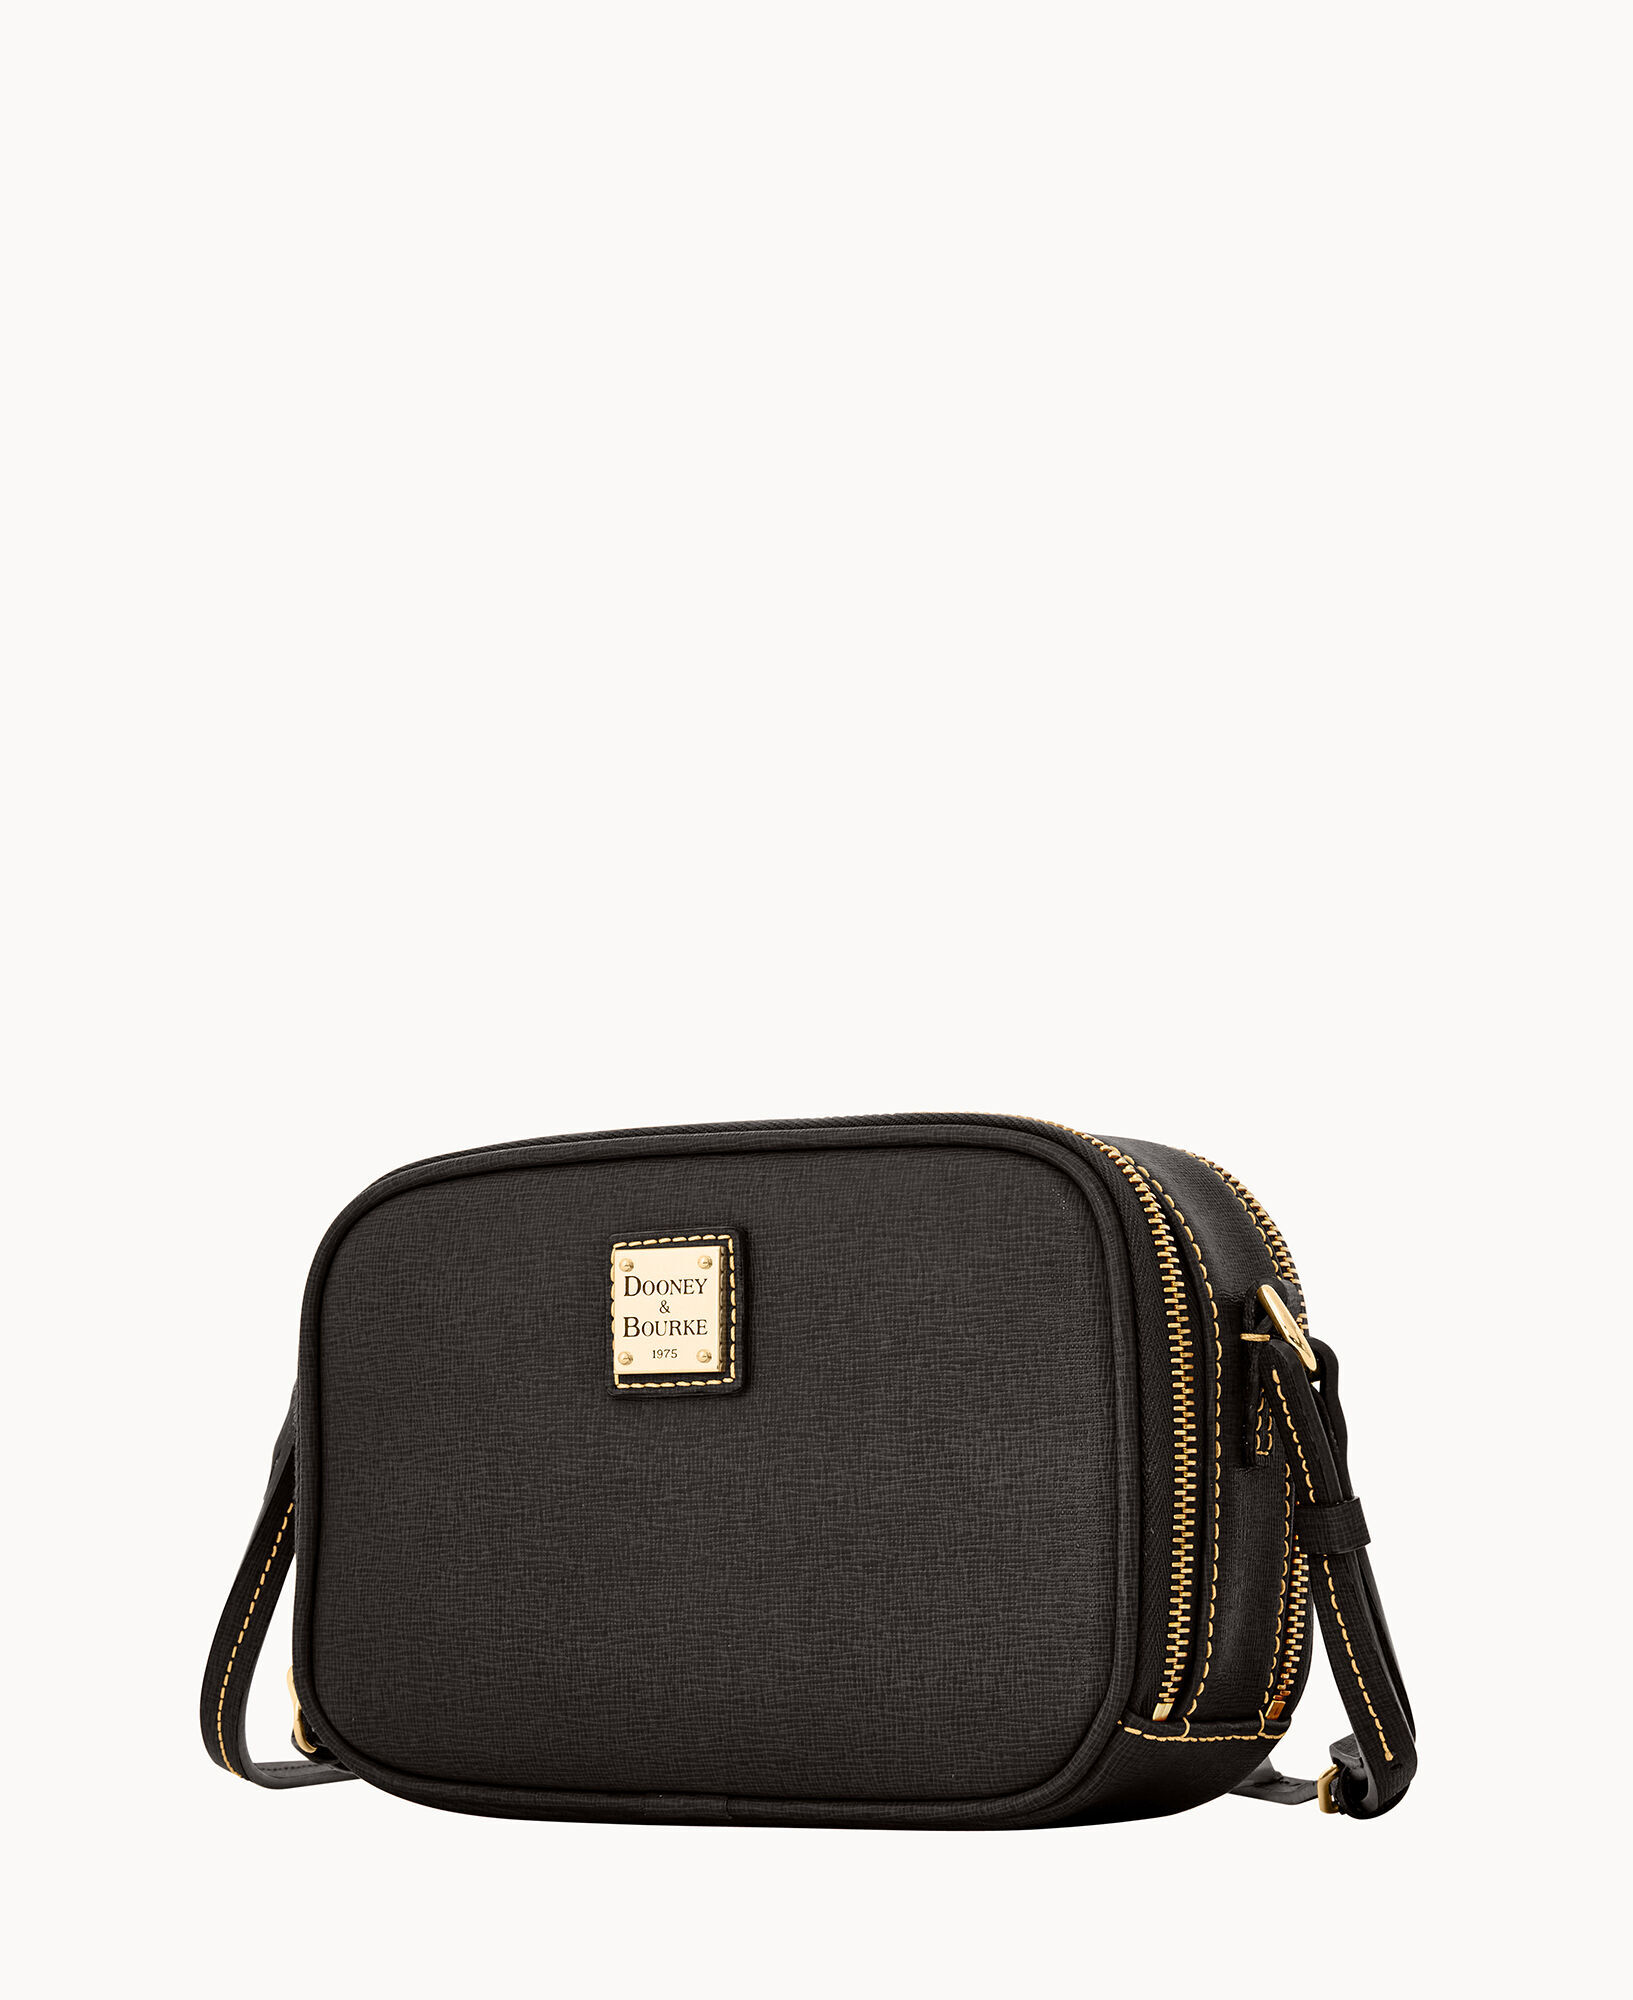 DOONEY & BOURKE LEXI Black Saffiano Leather Small Adjustable Crossbody  Bag